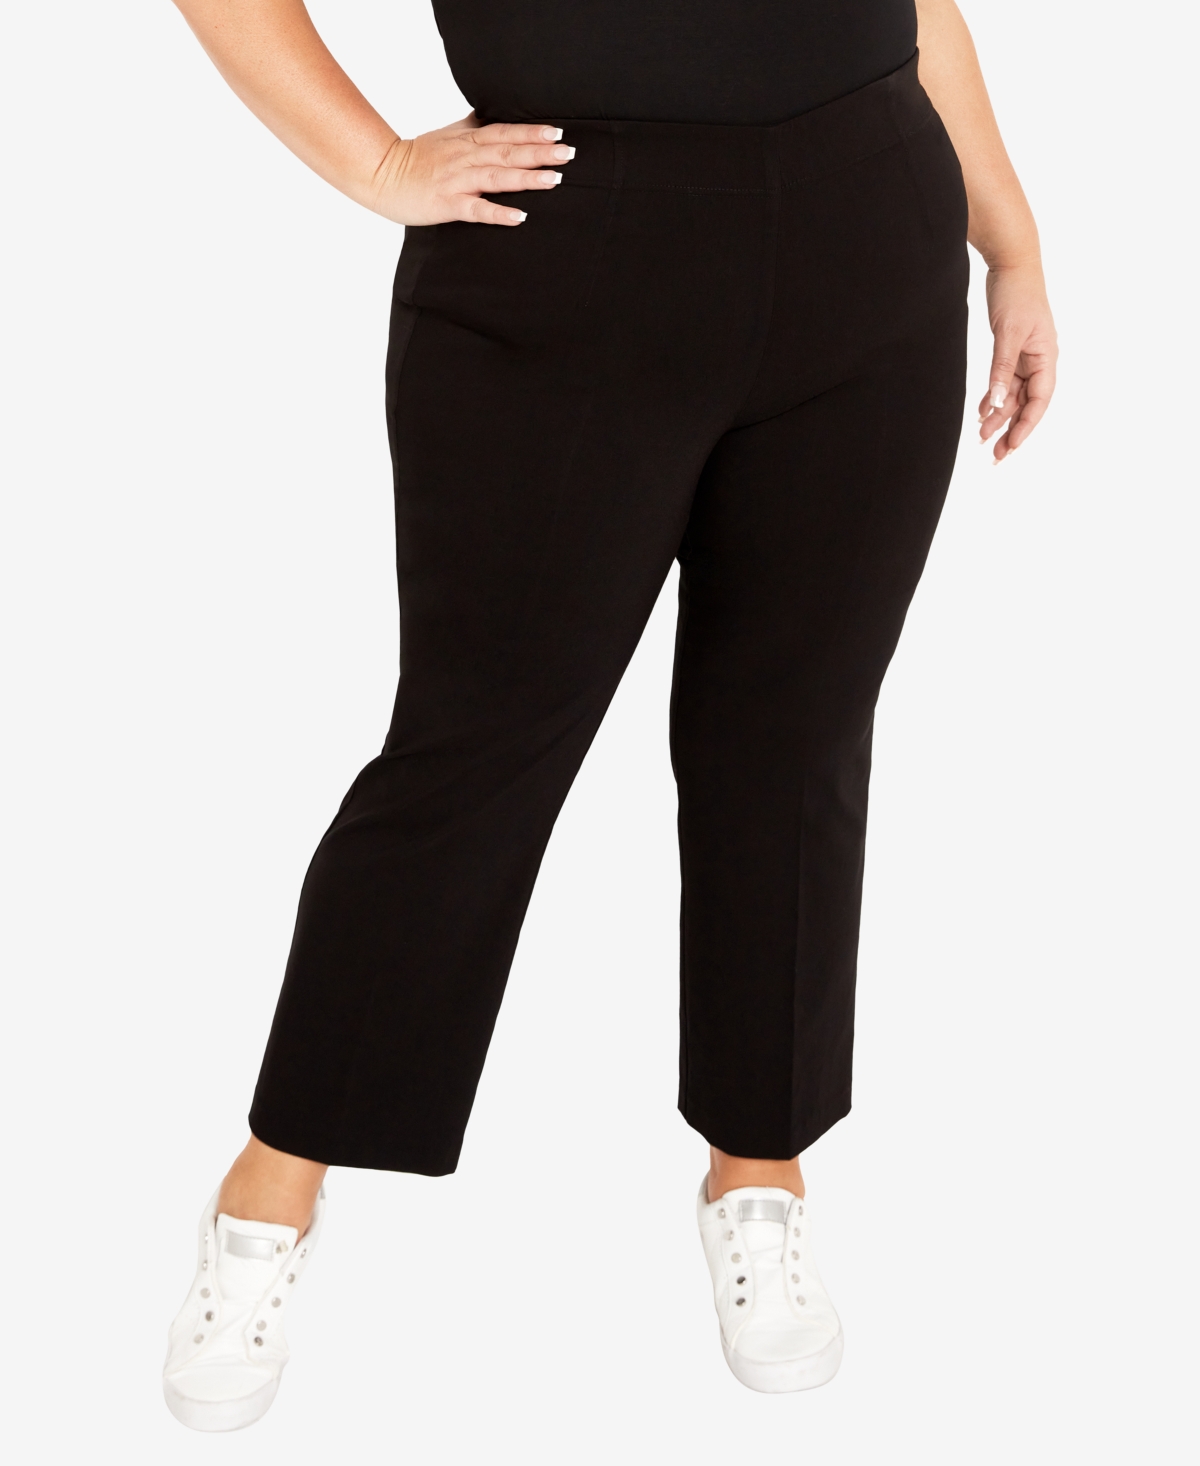 Avenue  Women's Plus Size Super Stretch Lace Capri - Black - 18w